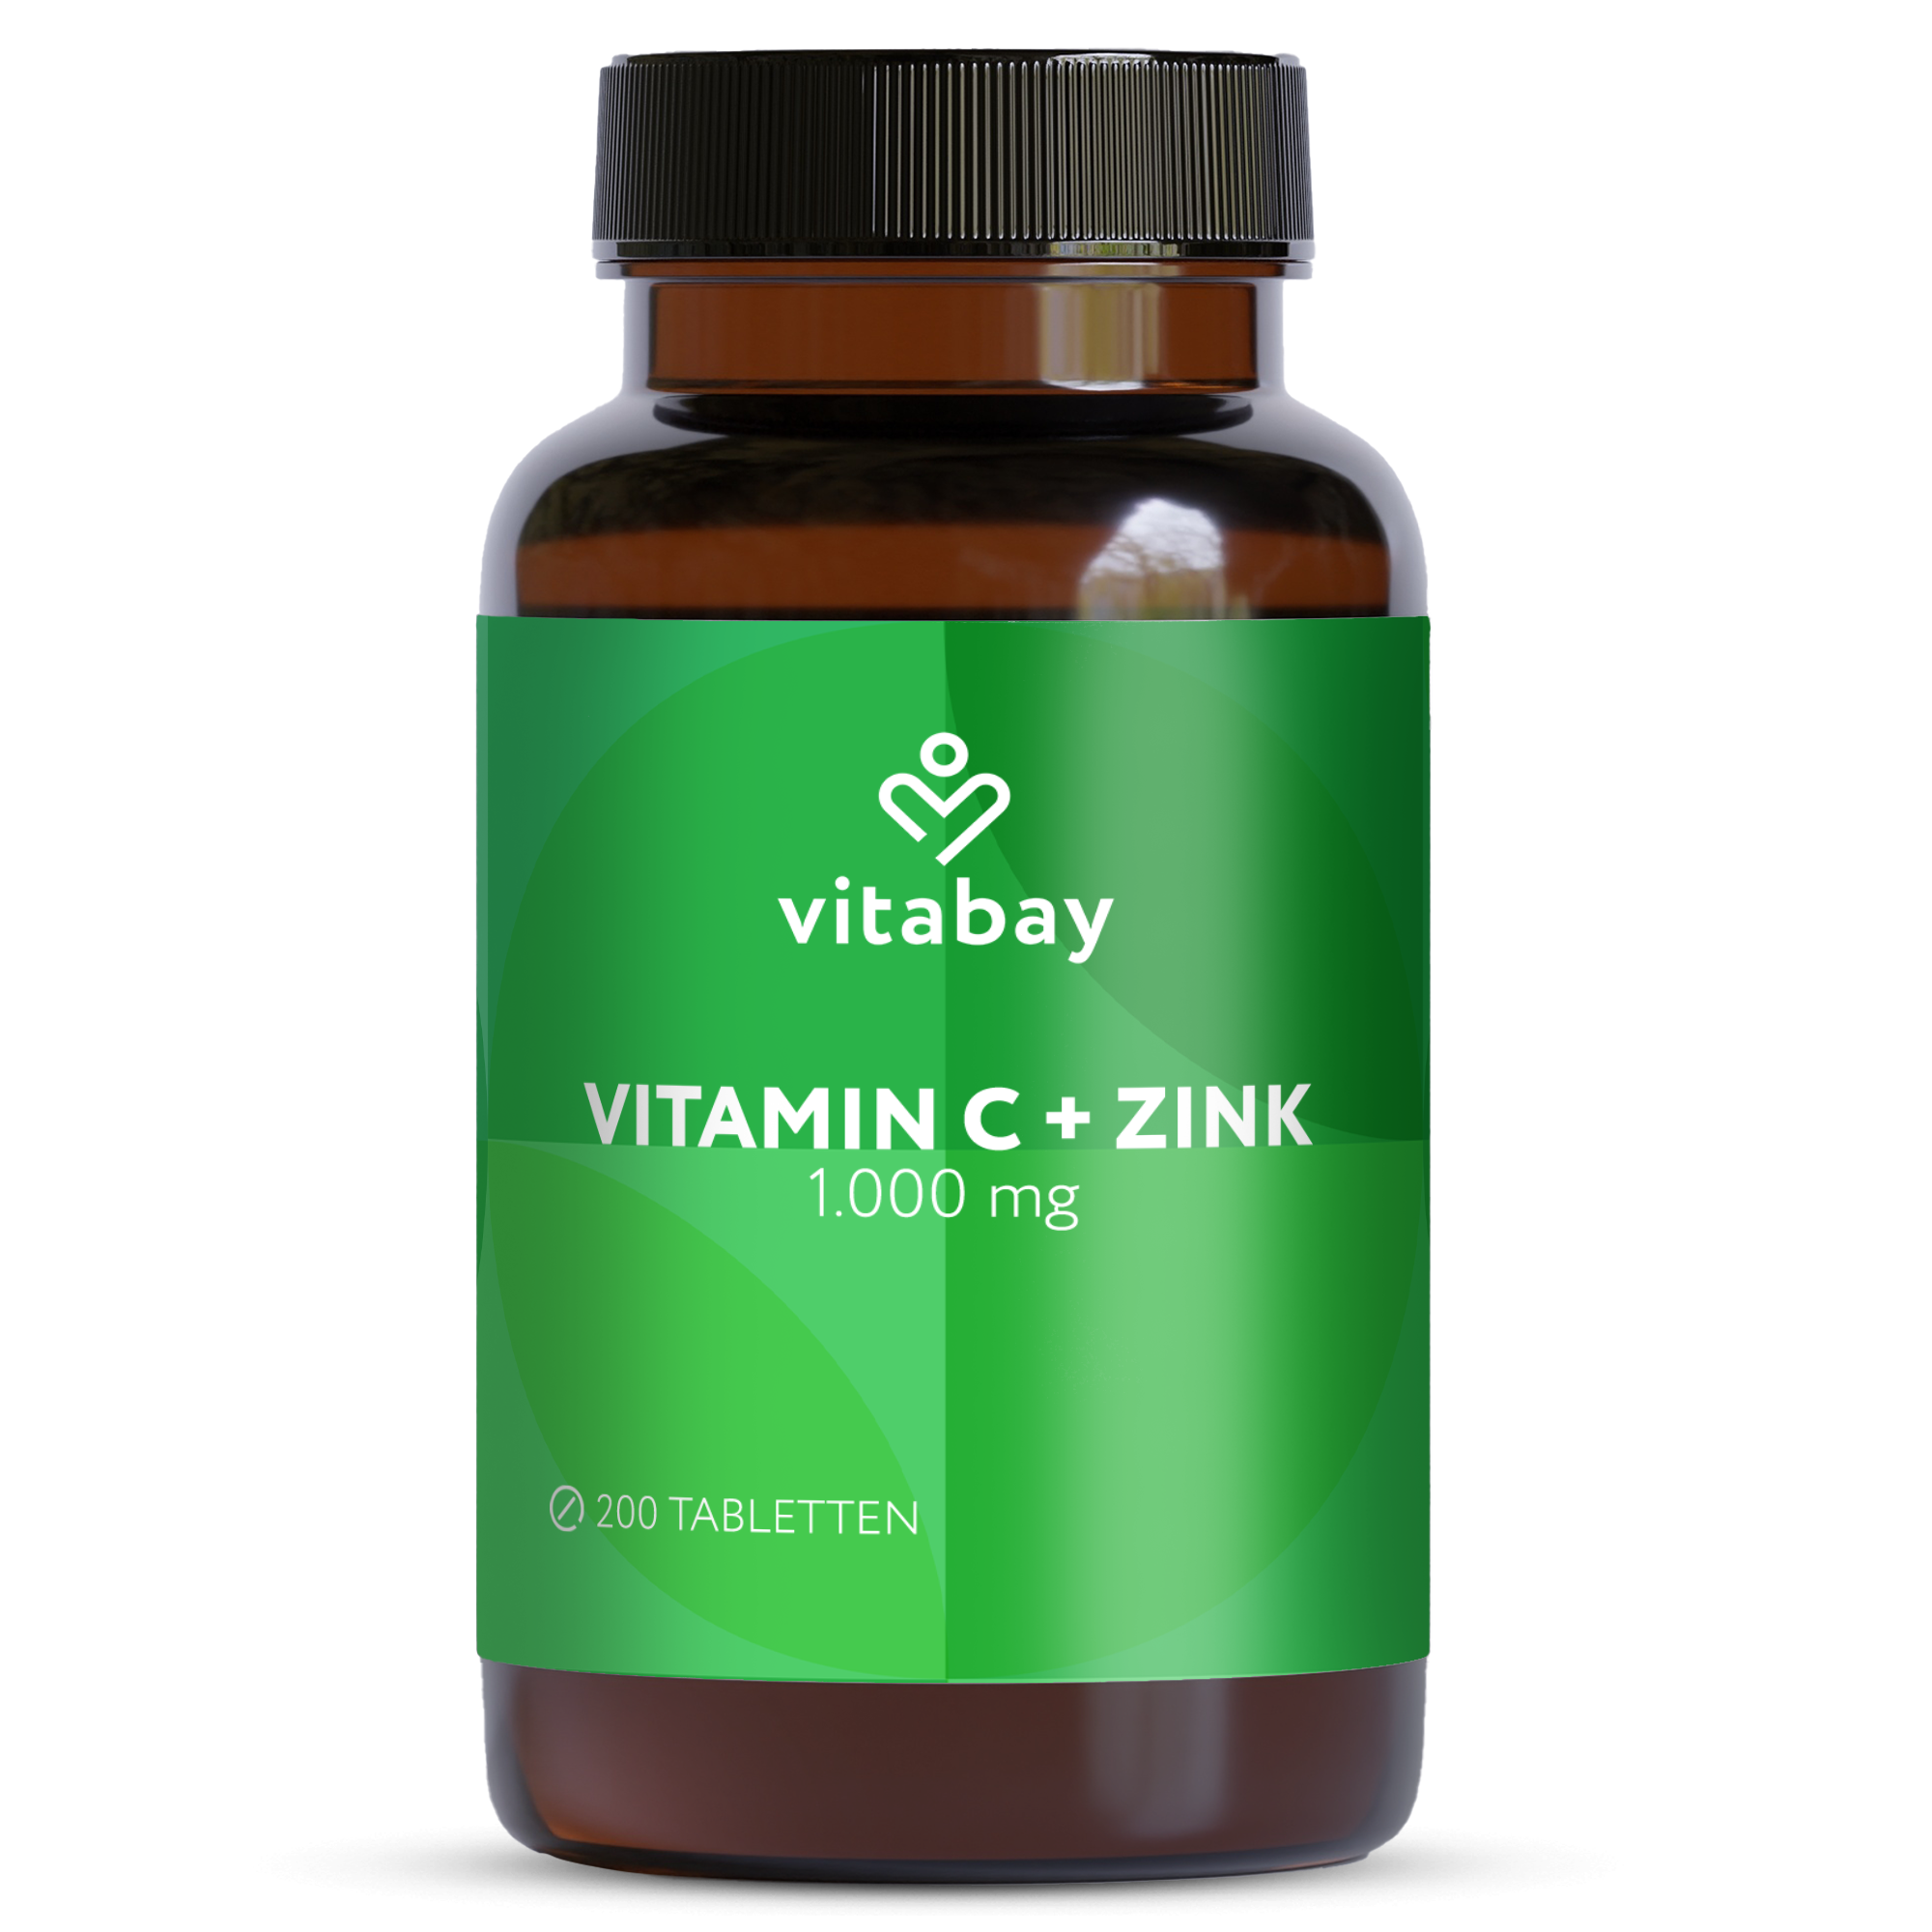 Vitamin C 1000 mg + Zink - 200 vegane Tabletten